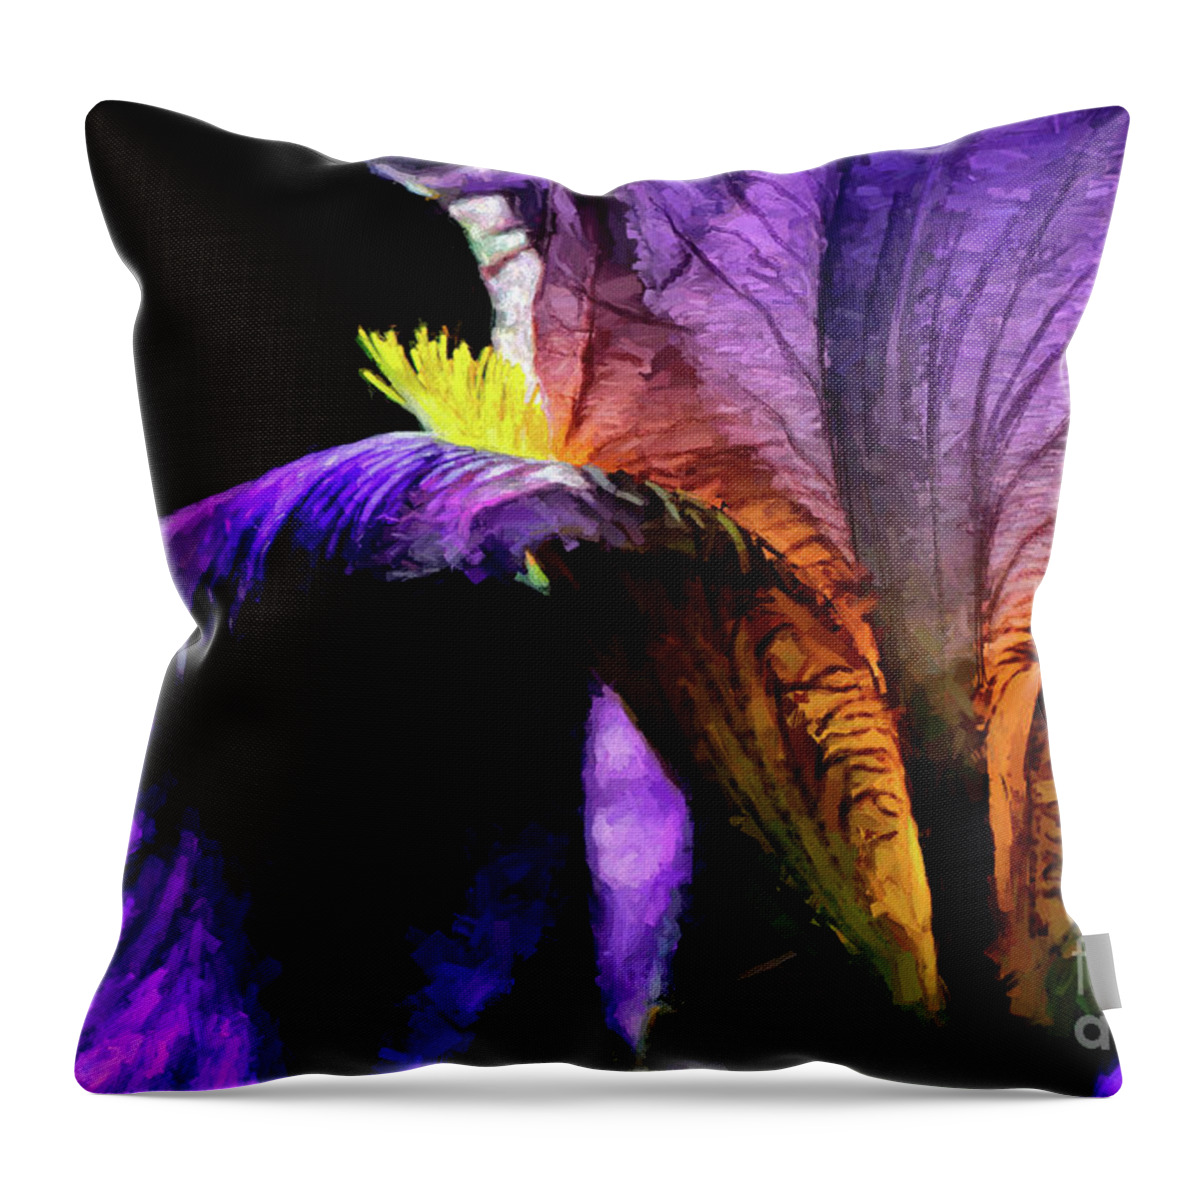 Flower Throw Pillow featuring the digital art Purple Iris by Lois Bryan